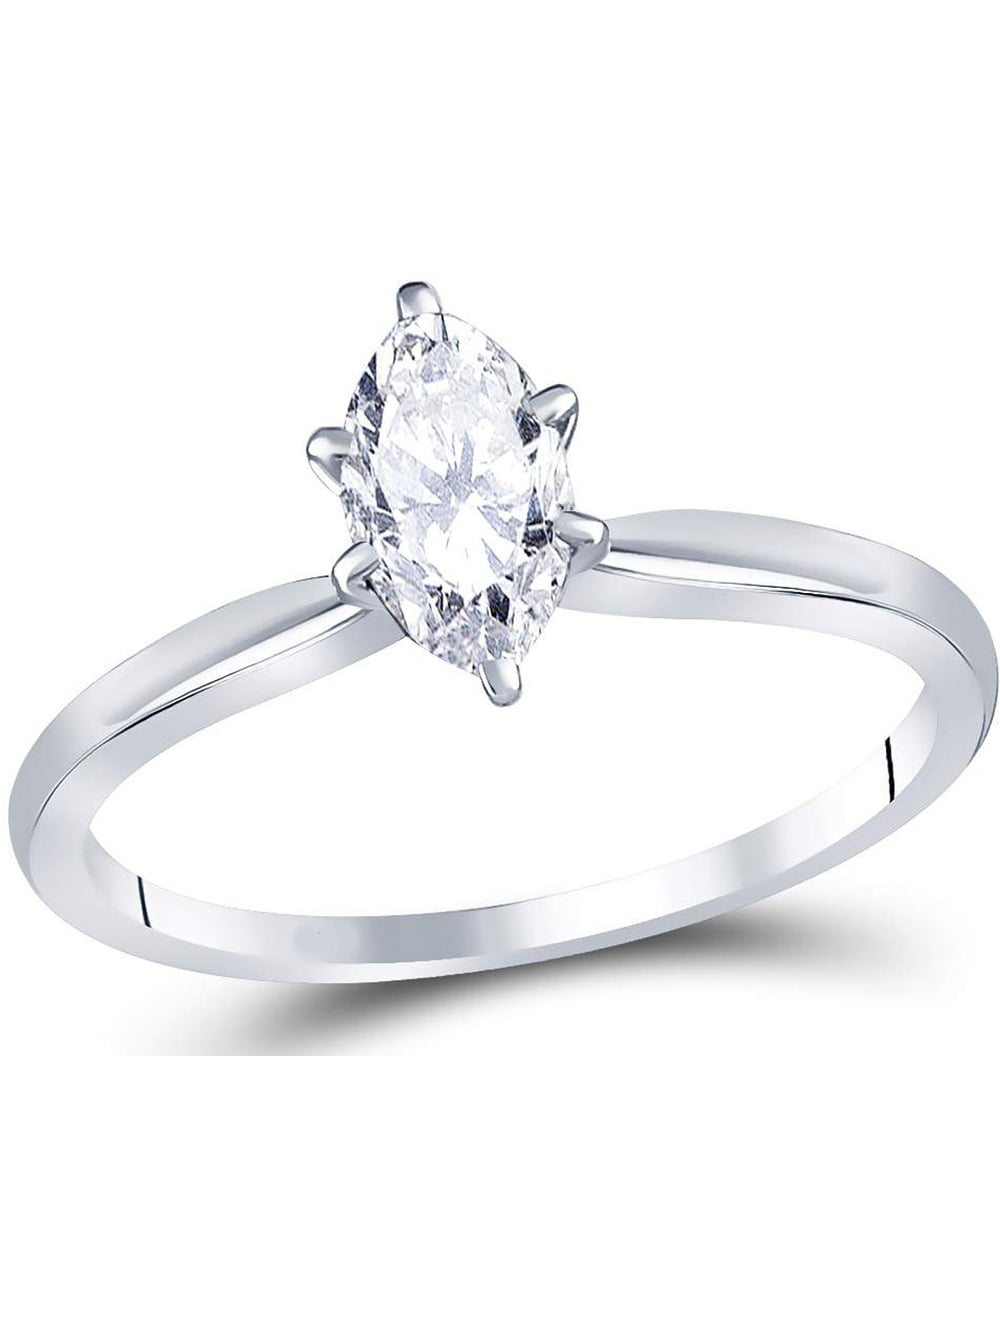 3/4 Carat (Ctw J-K, I1) Marquise Cut Solitaire Diamond Engagement Ring ...